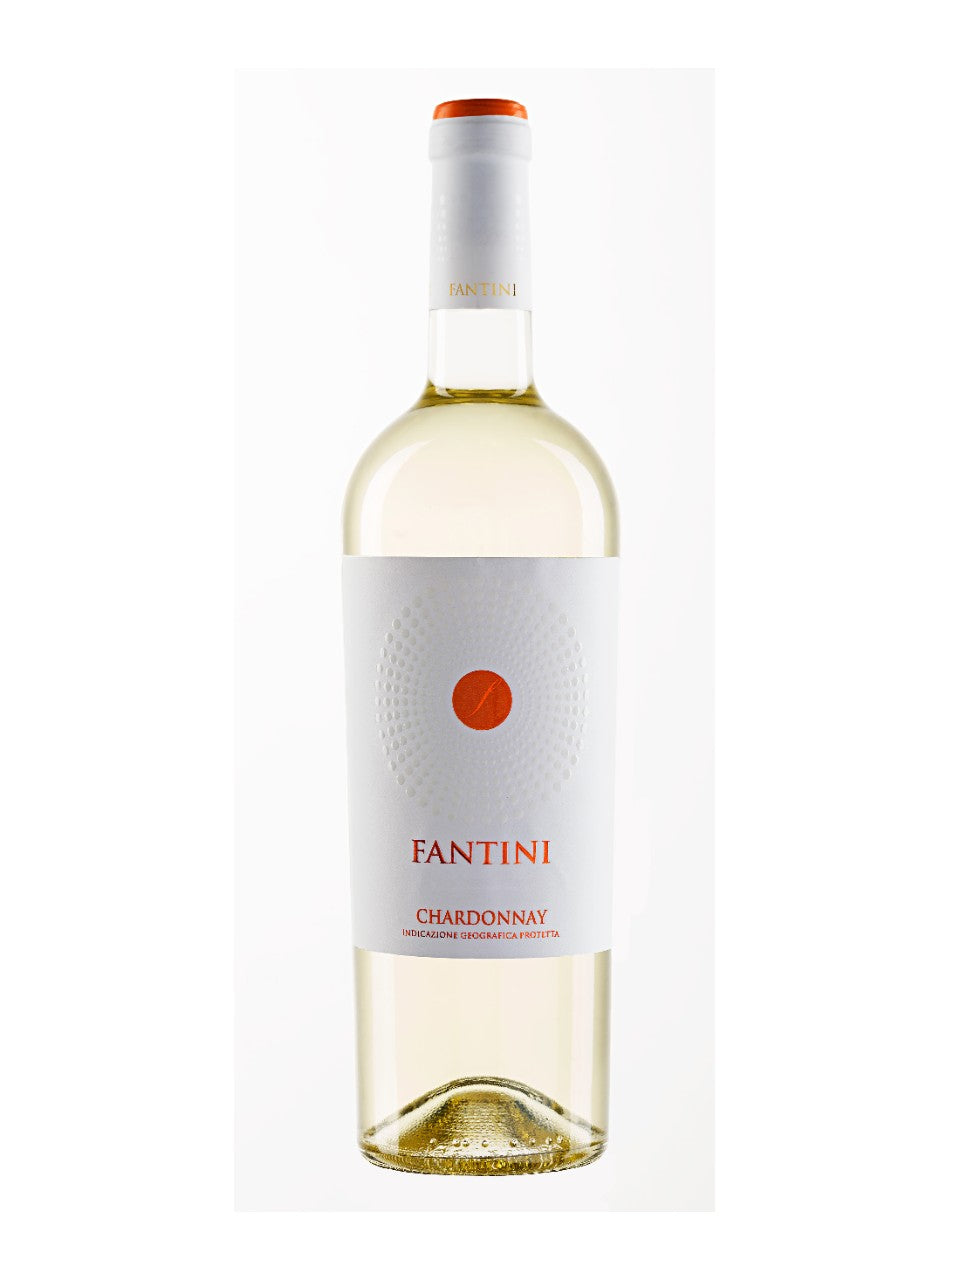 Fantini Farnese Chardonnay 750 mL bottle